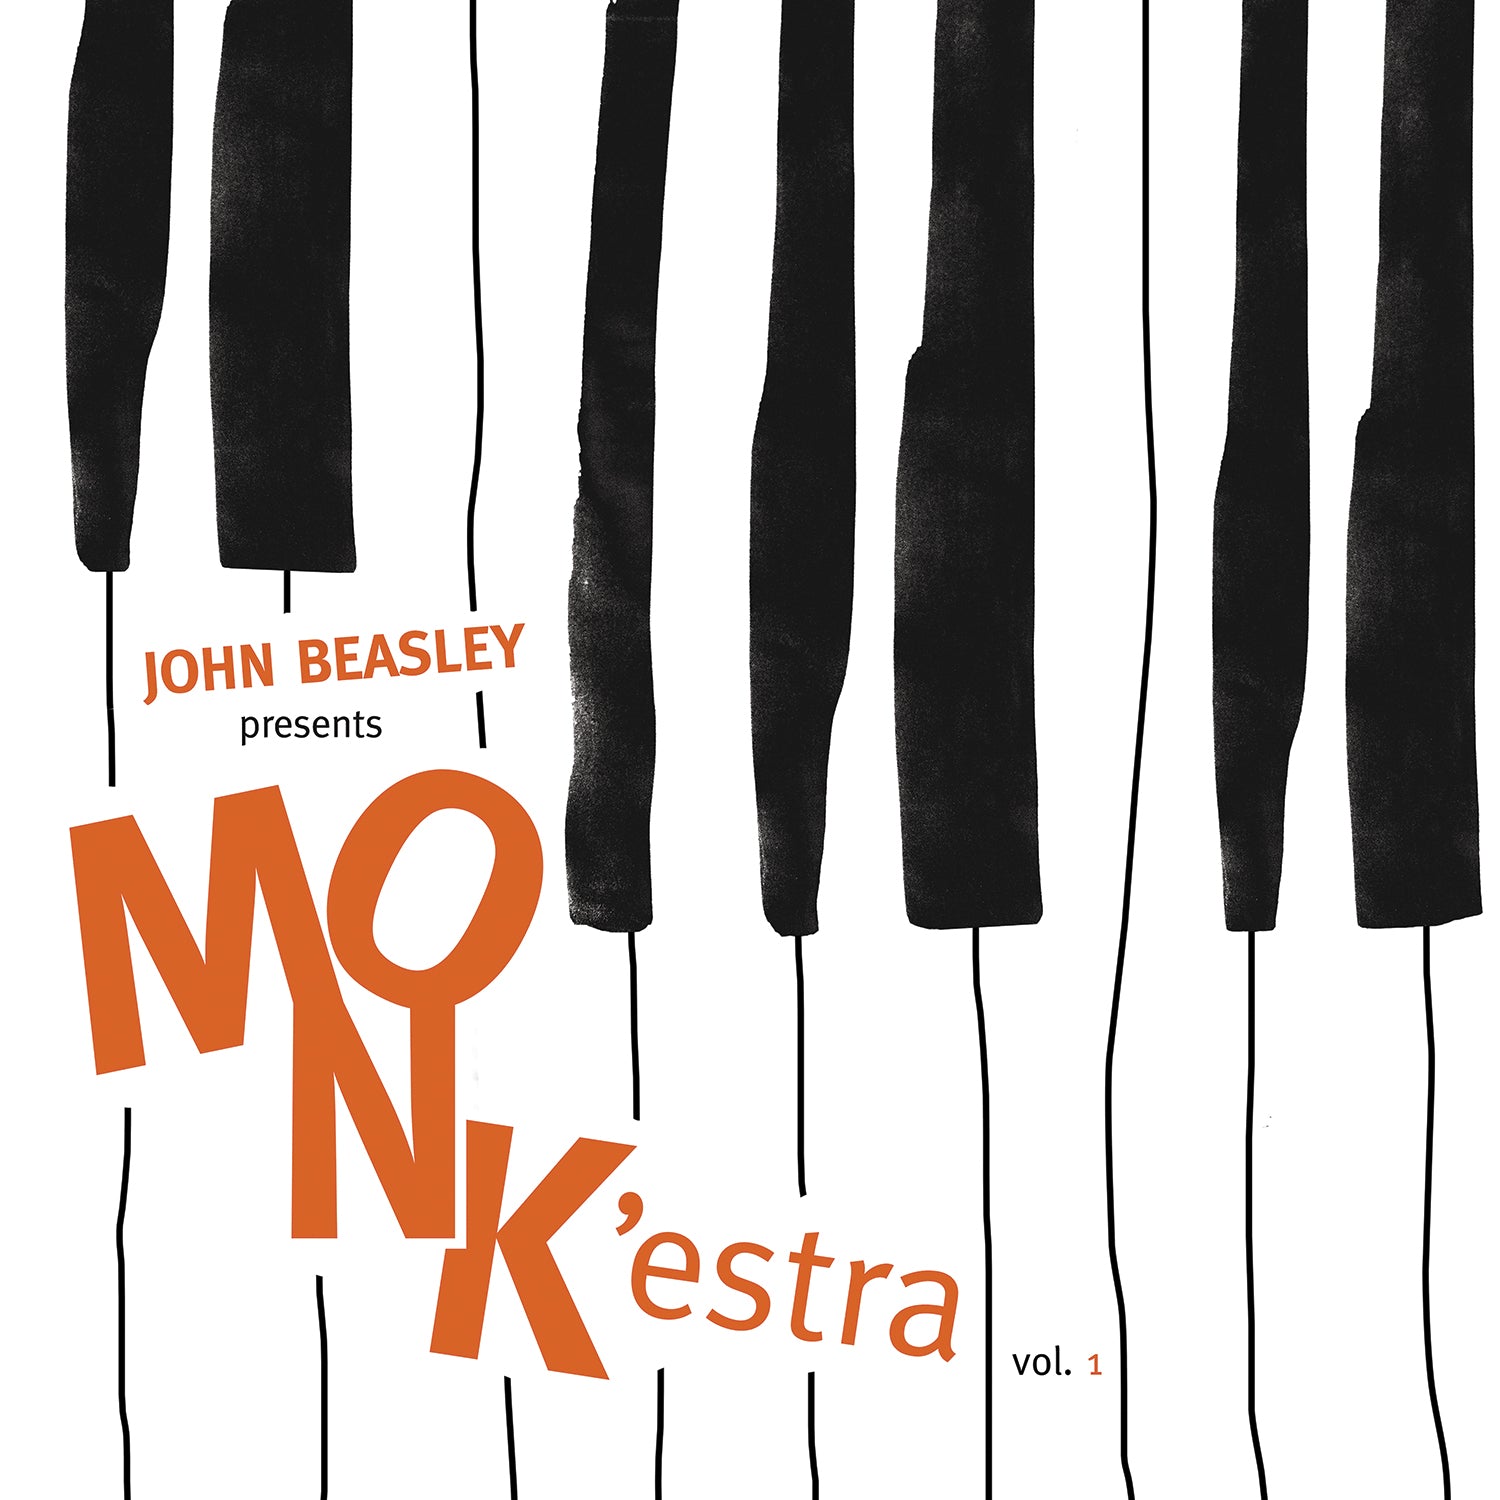 John Beasley - MONK'estra Vol. 1